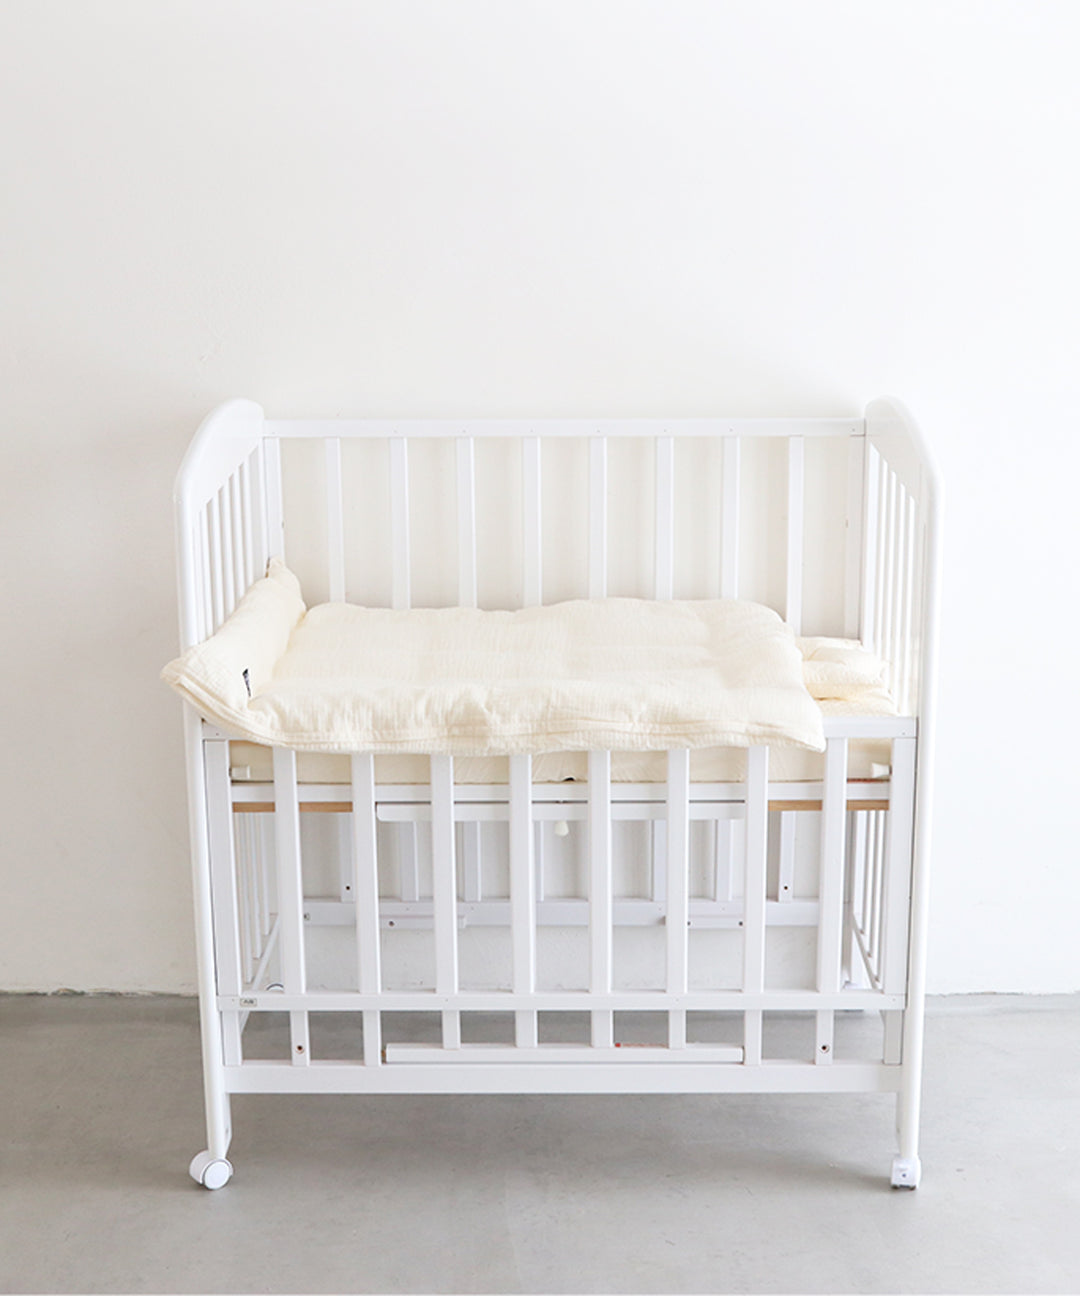 Washable Baby futon set (5 items) Mini size (Ibul fabric with Moroccan design)